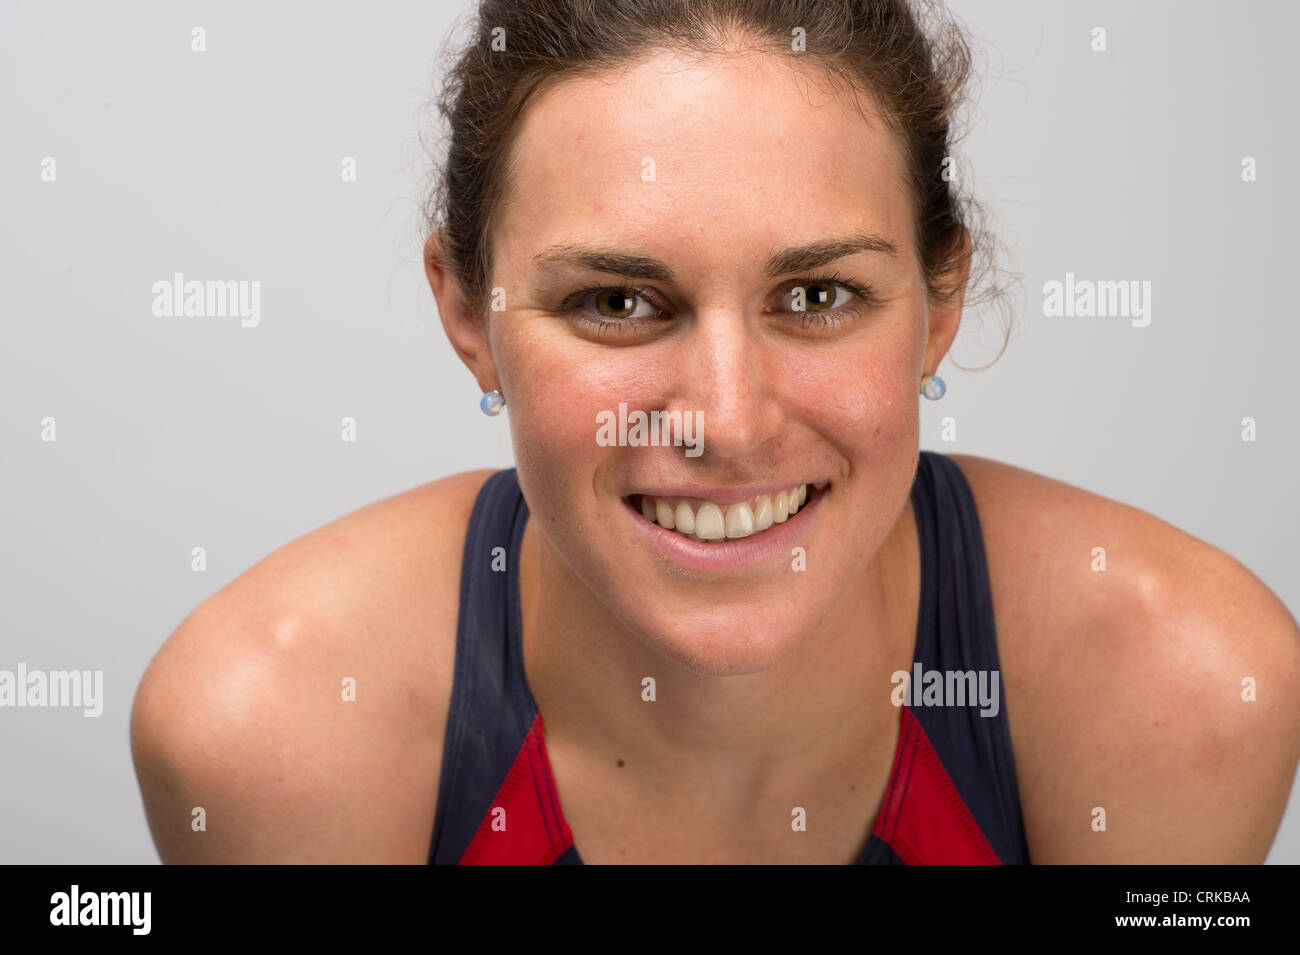 Triathlete Gwen Jorgensen at the Team USA Media Summit in Dallas, TX in advance of the 2012 London Olympics. Stock Photo